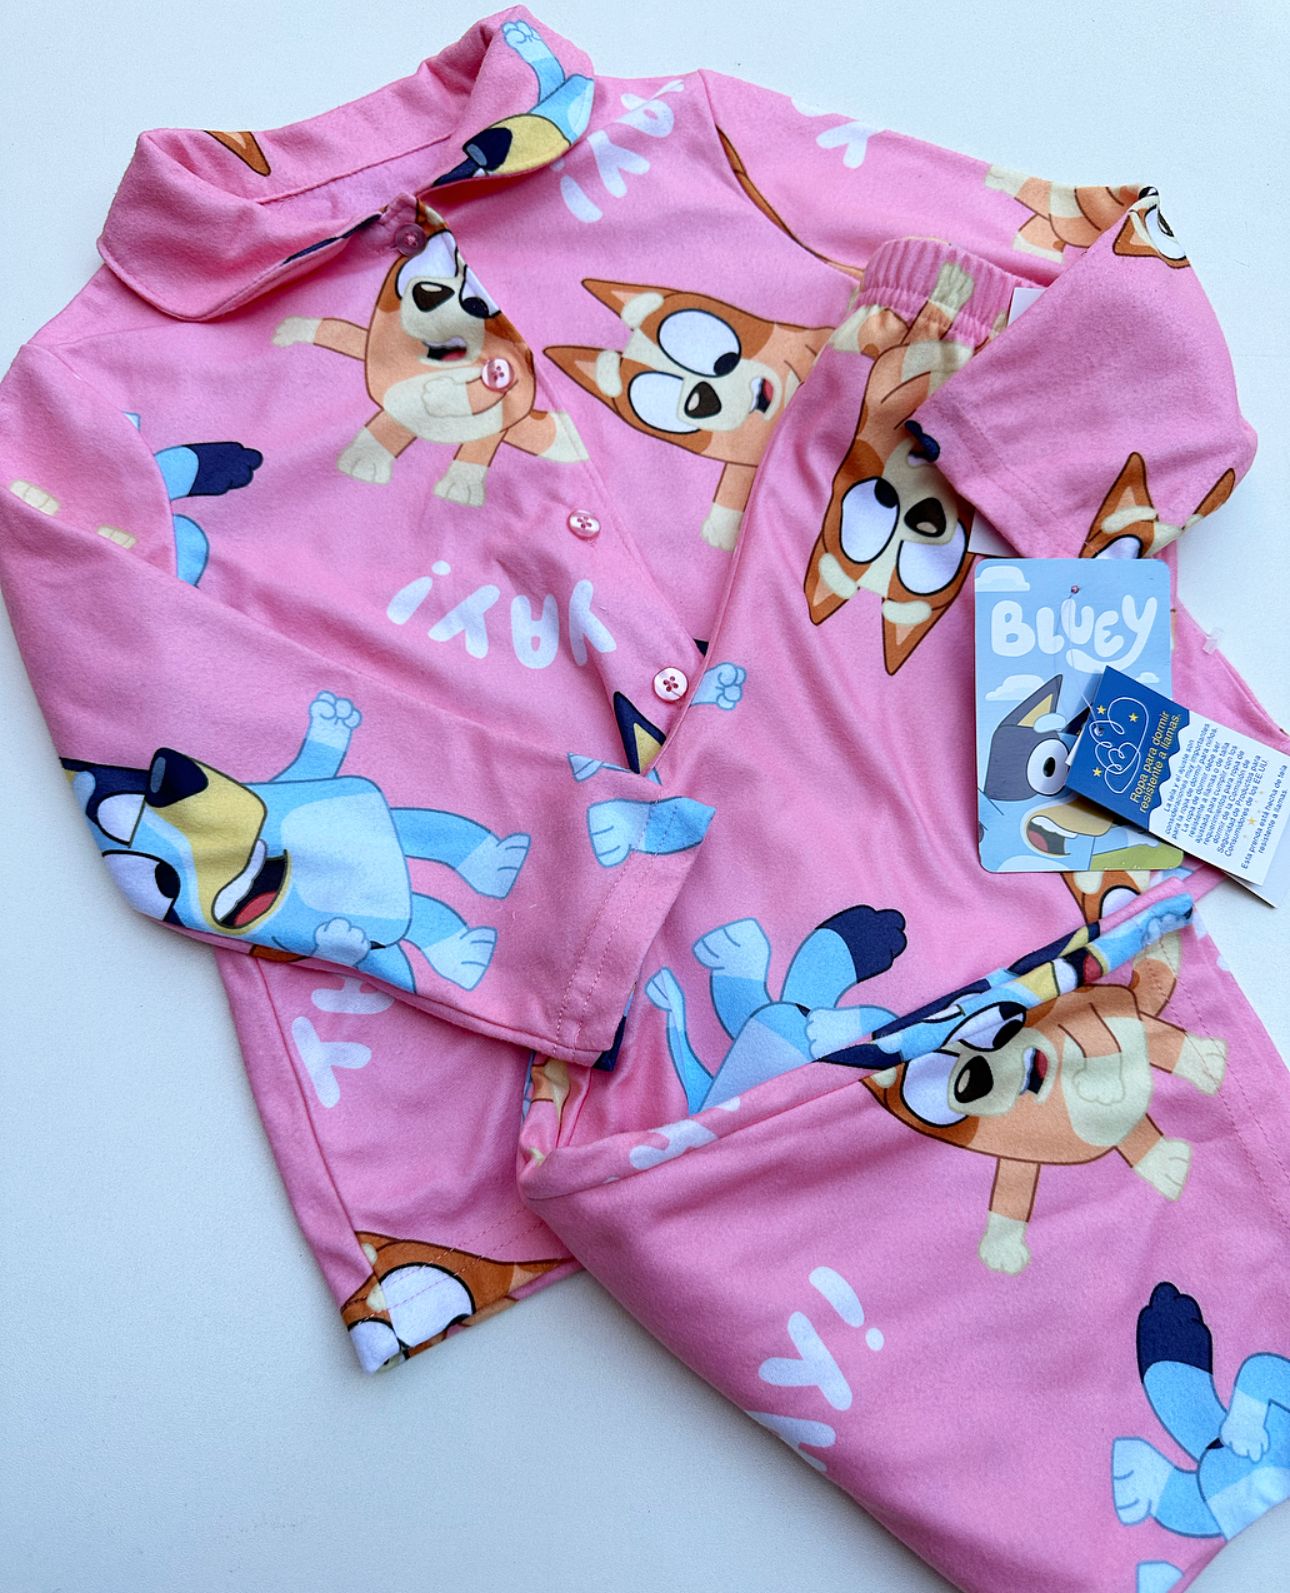 Kabü Store on Instagram: Pedido listo ❤️❤️❤️ Demasiado bellas estas pijamas  de Bluey navideño❤️❤️ Tenemos disponibles por pedido!!❤️ ✨Tallas: 12m a 5 (  algunas se han agotado) 🏷️Precio: $38 el set  #blueypanama#blueynavidad#niñospamama